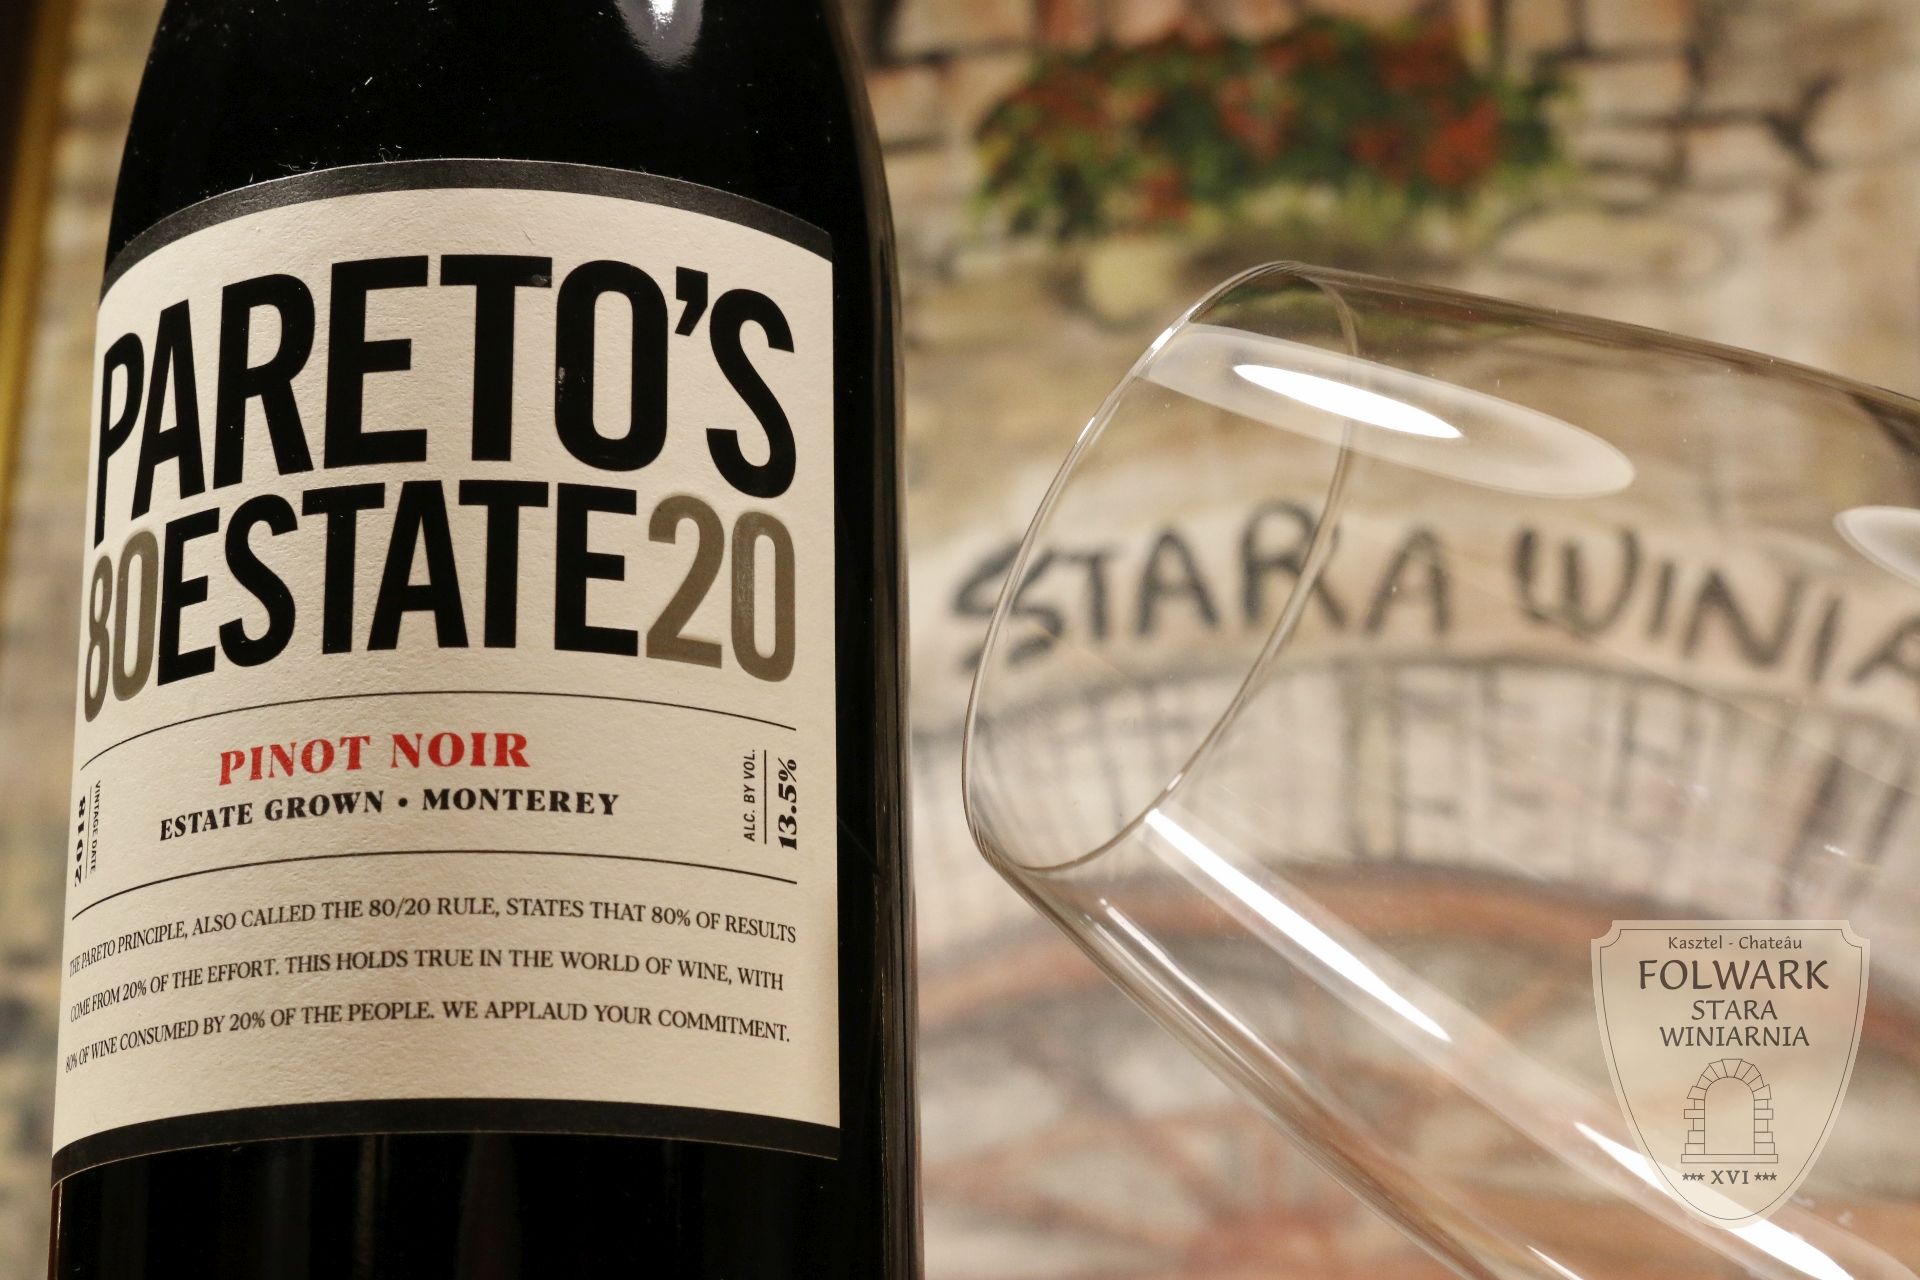 Pareto's Pinot Noir